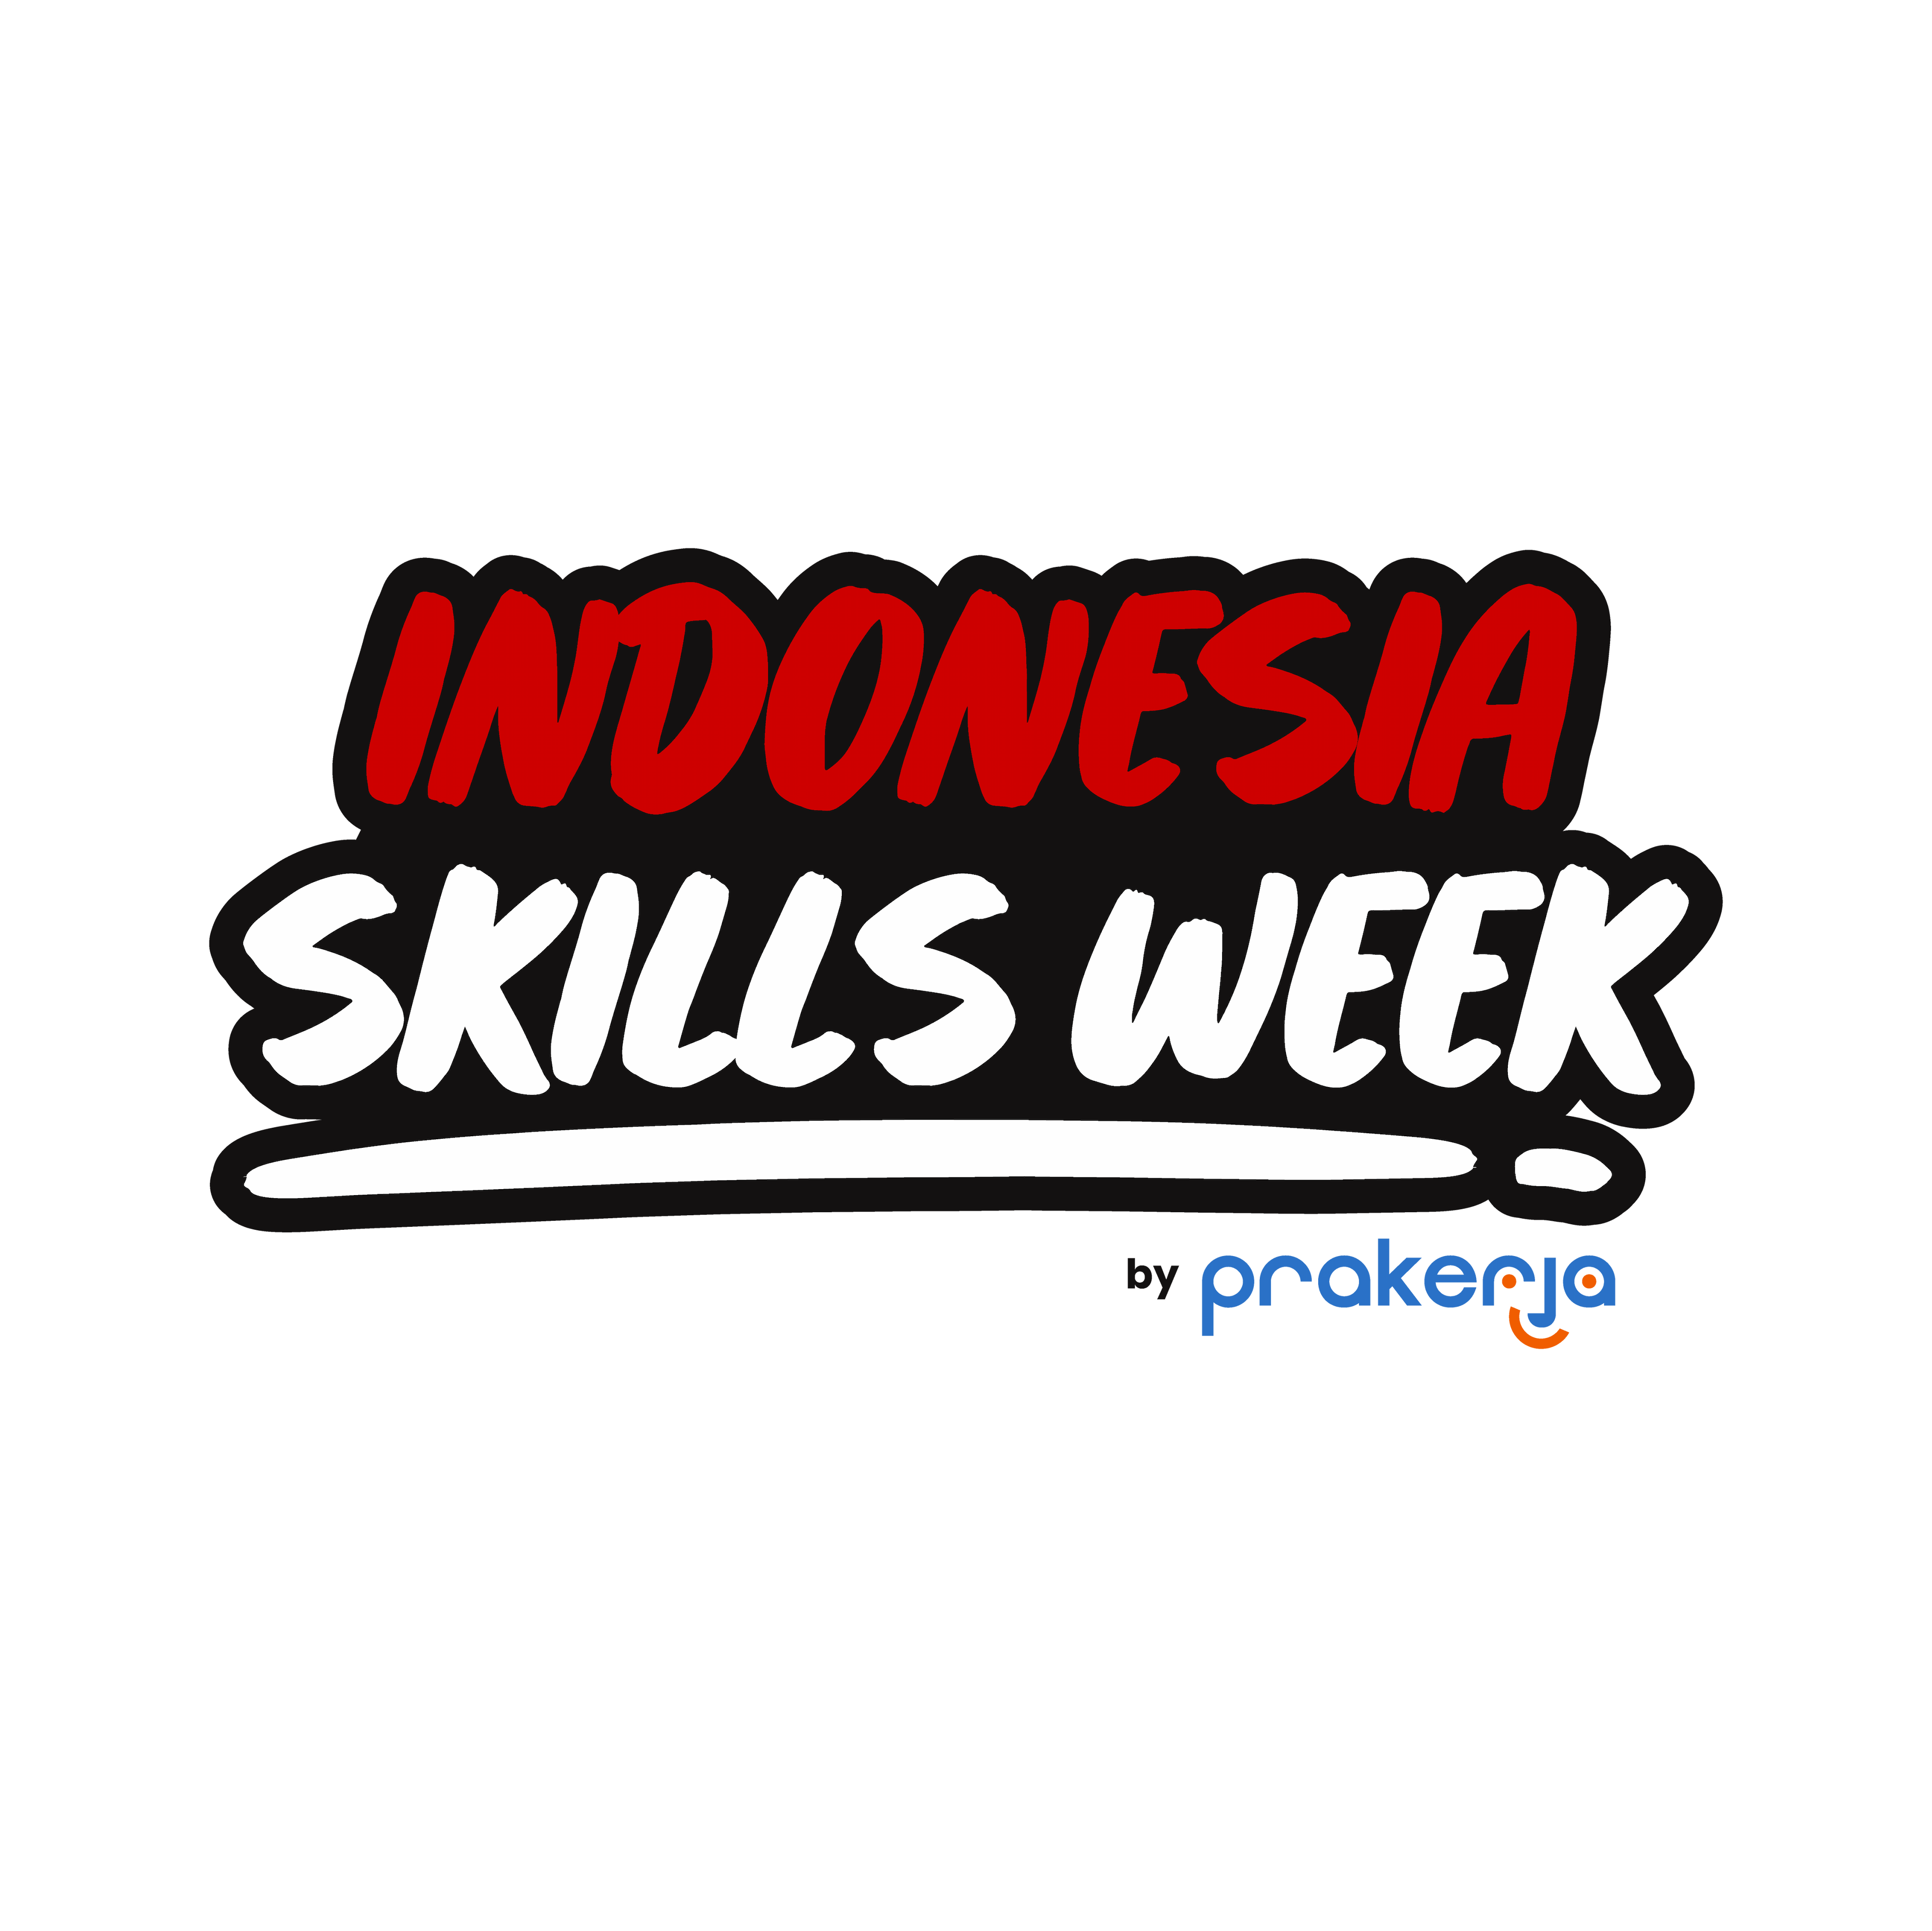 Indonesia Skill Week logo